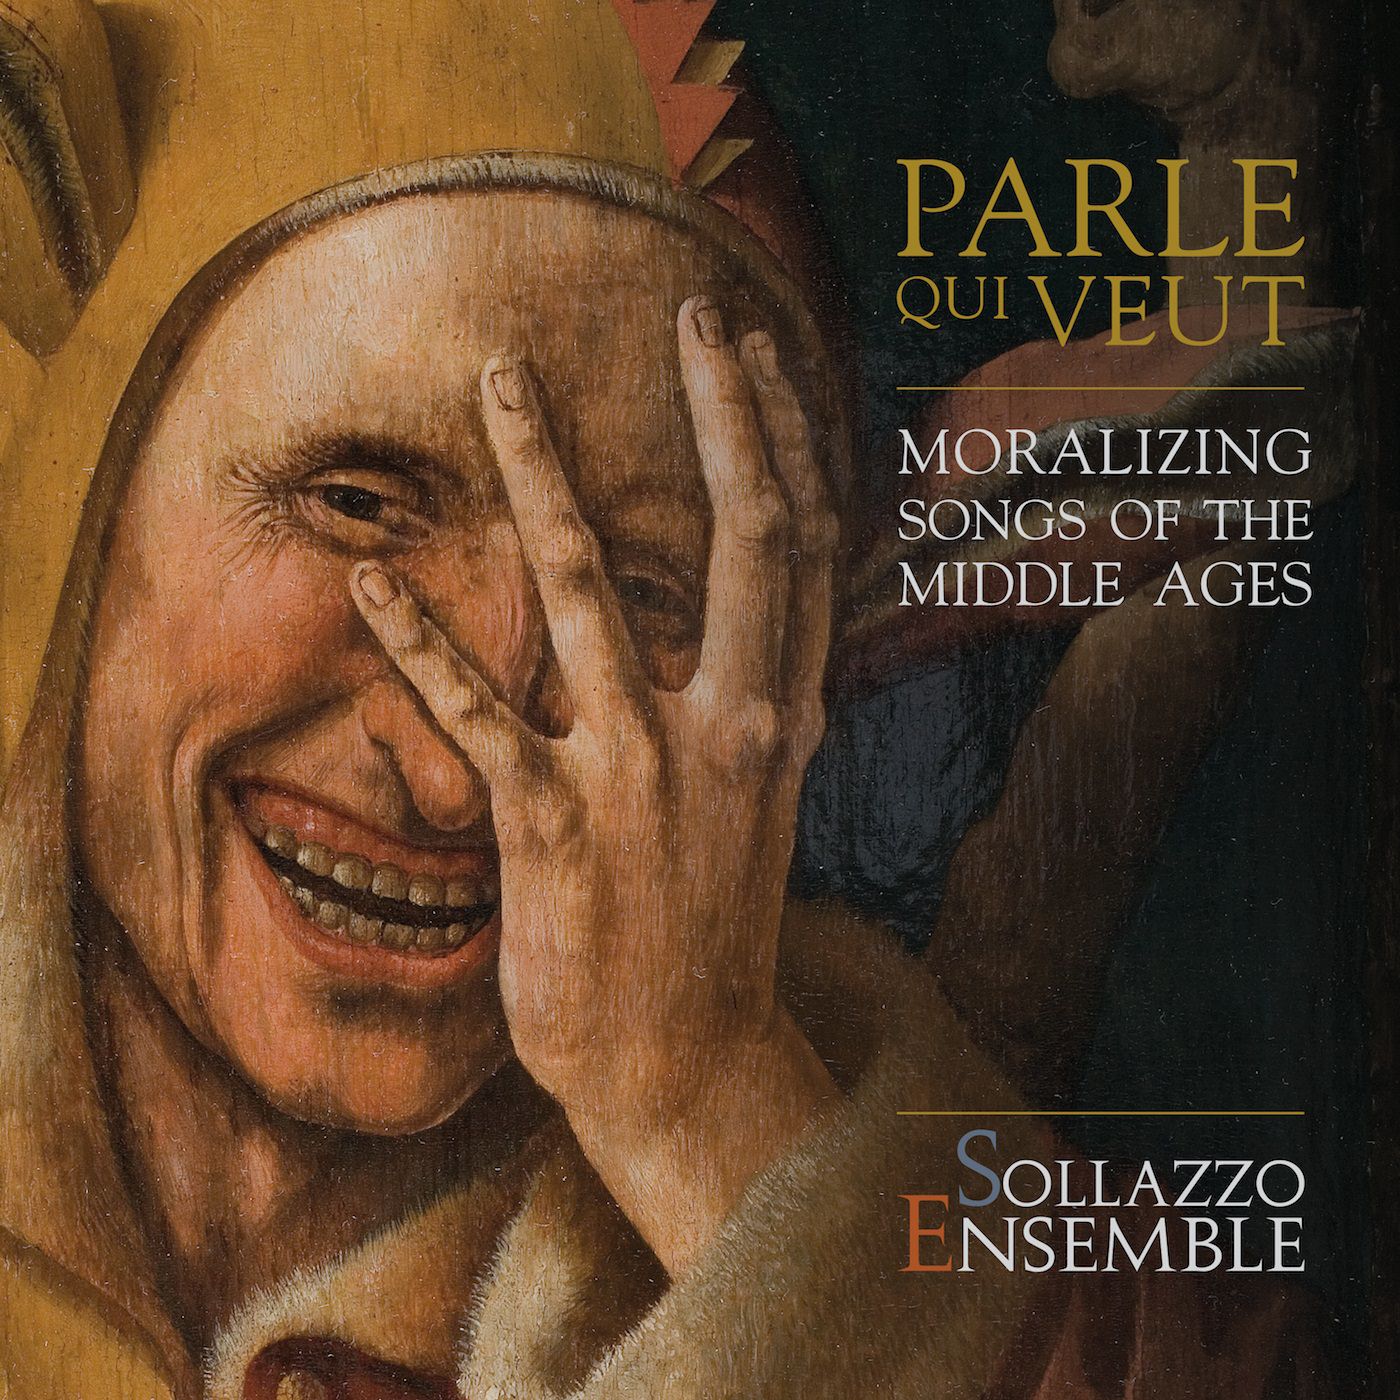 Sollazzo Ensemble – Parle que veut: Moralizing Songs of the Middle Ages (2017) [FLAC 24bit/96kHz]